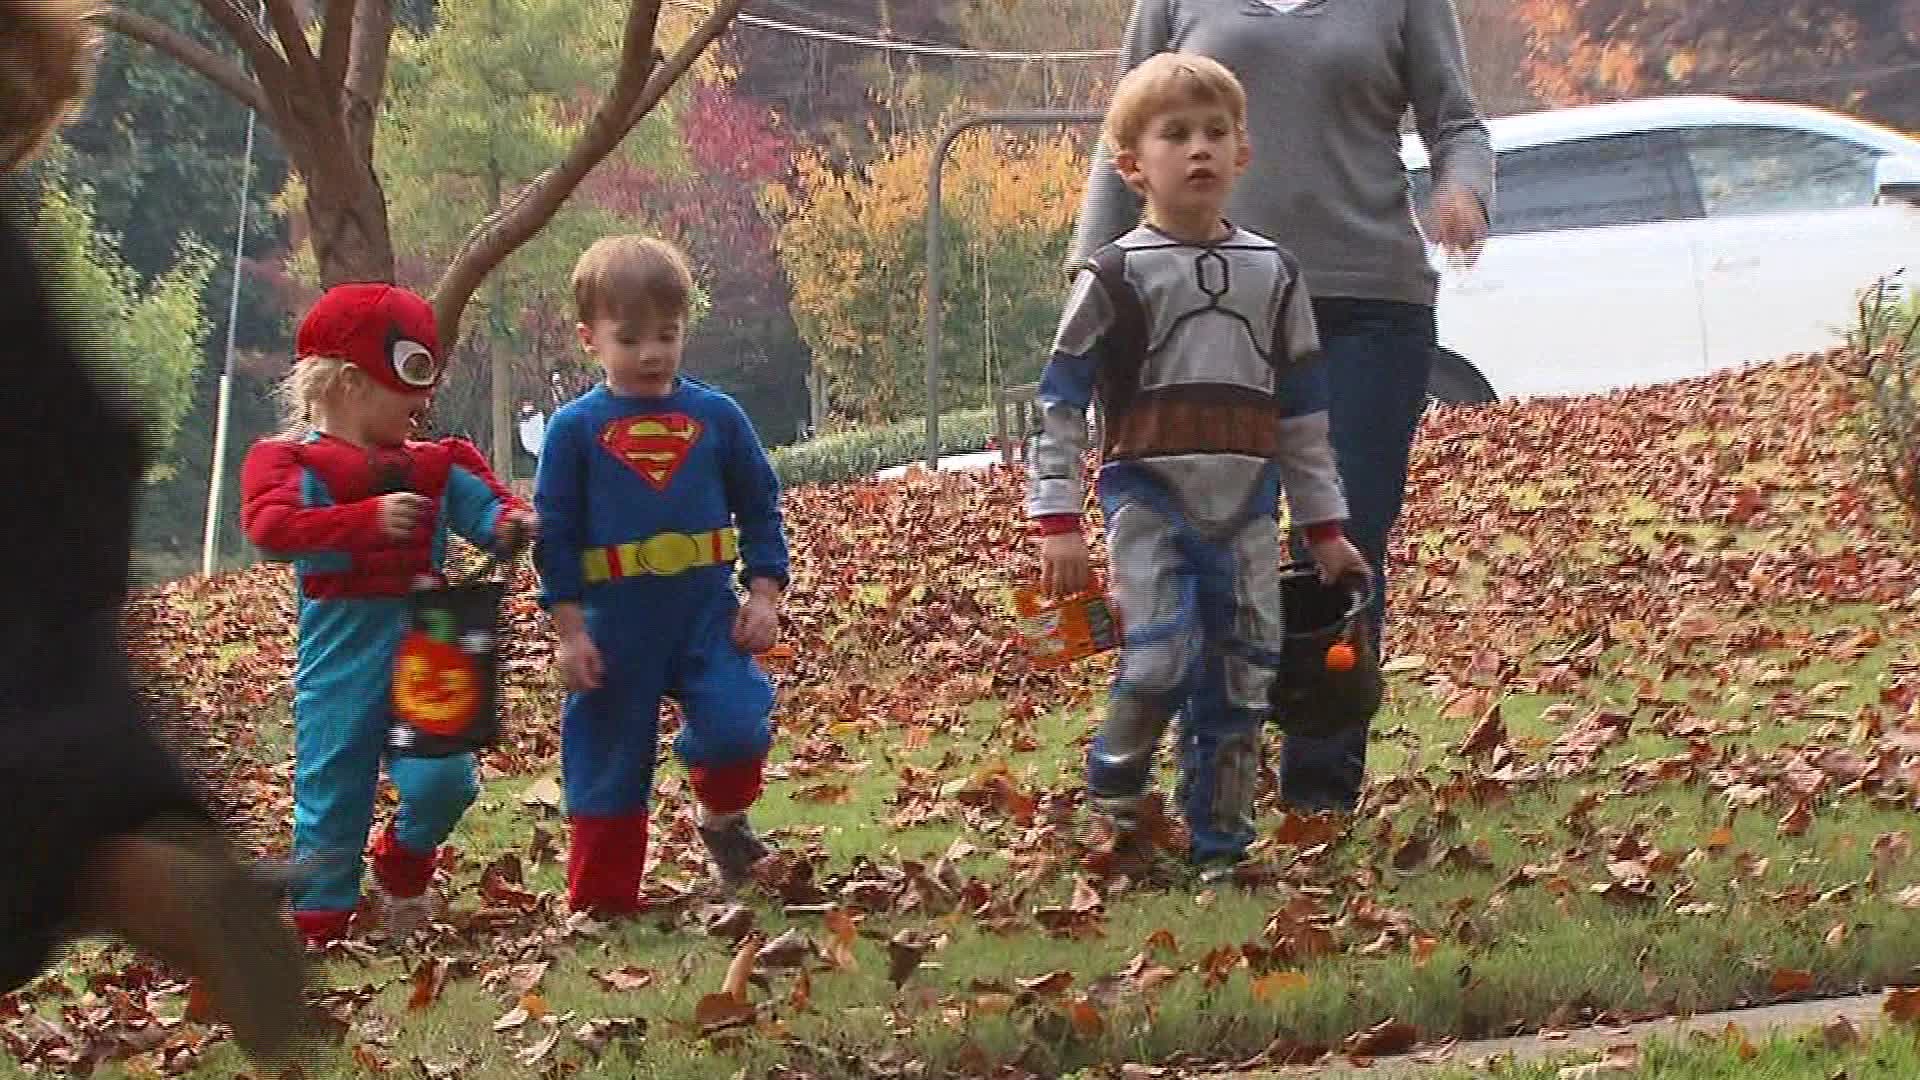 Halloween effort aims to bring joy to kids with food allergies